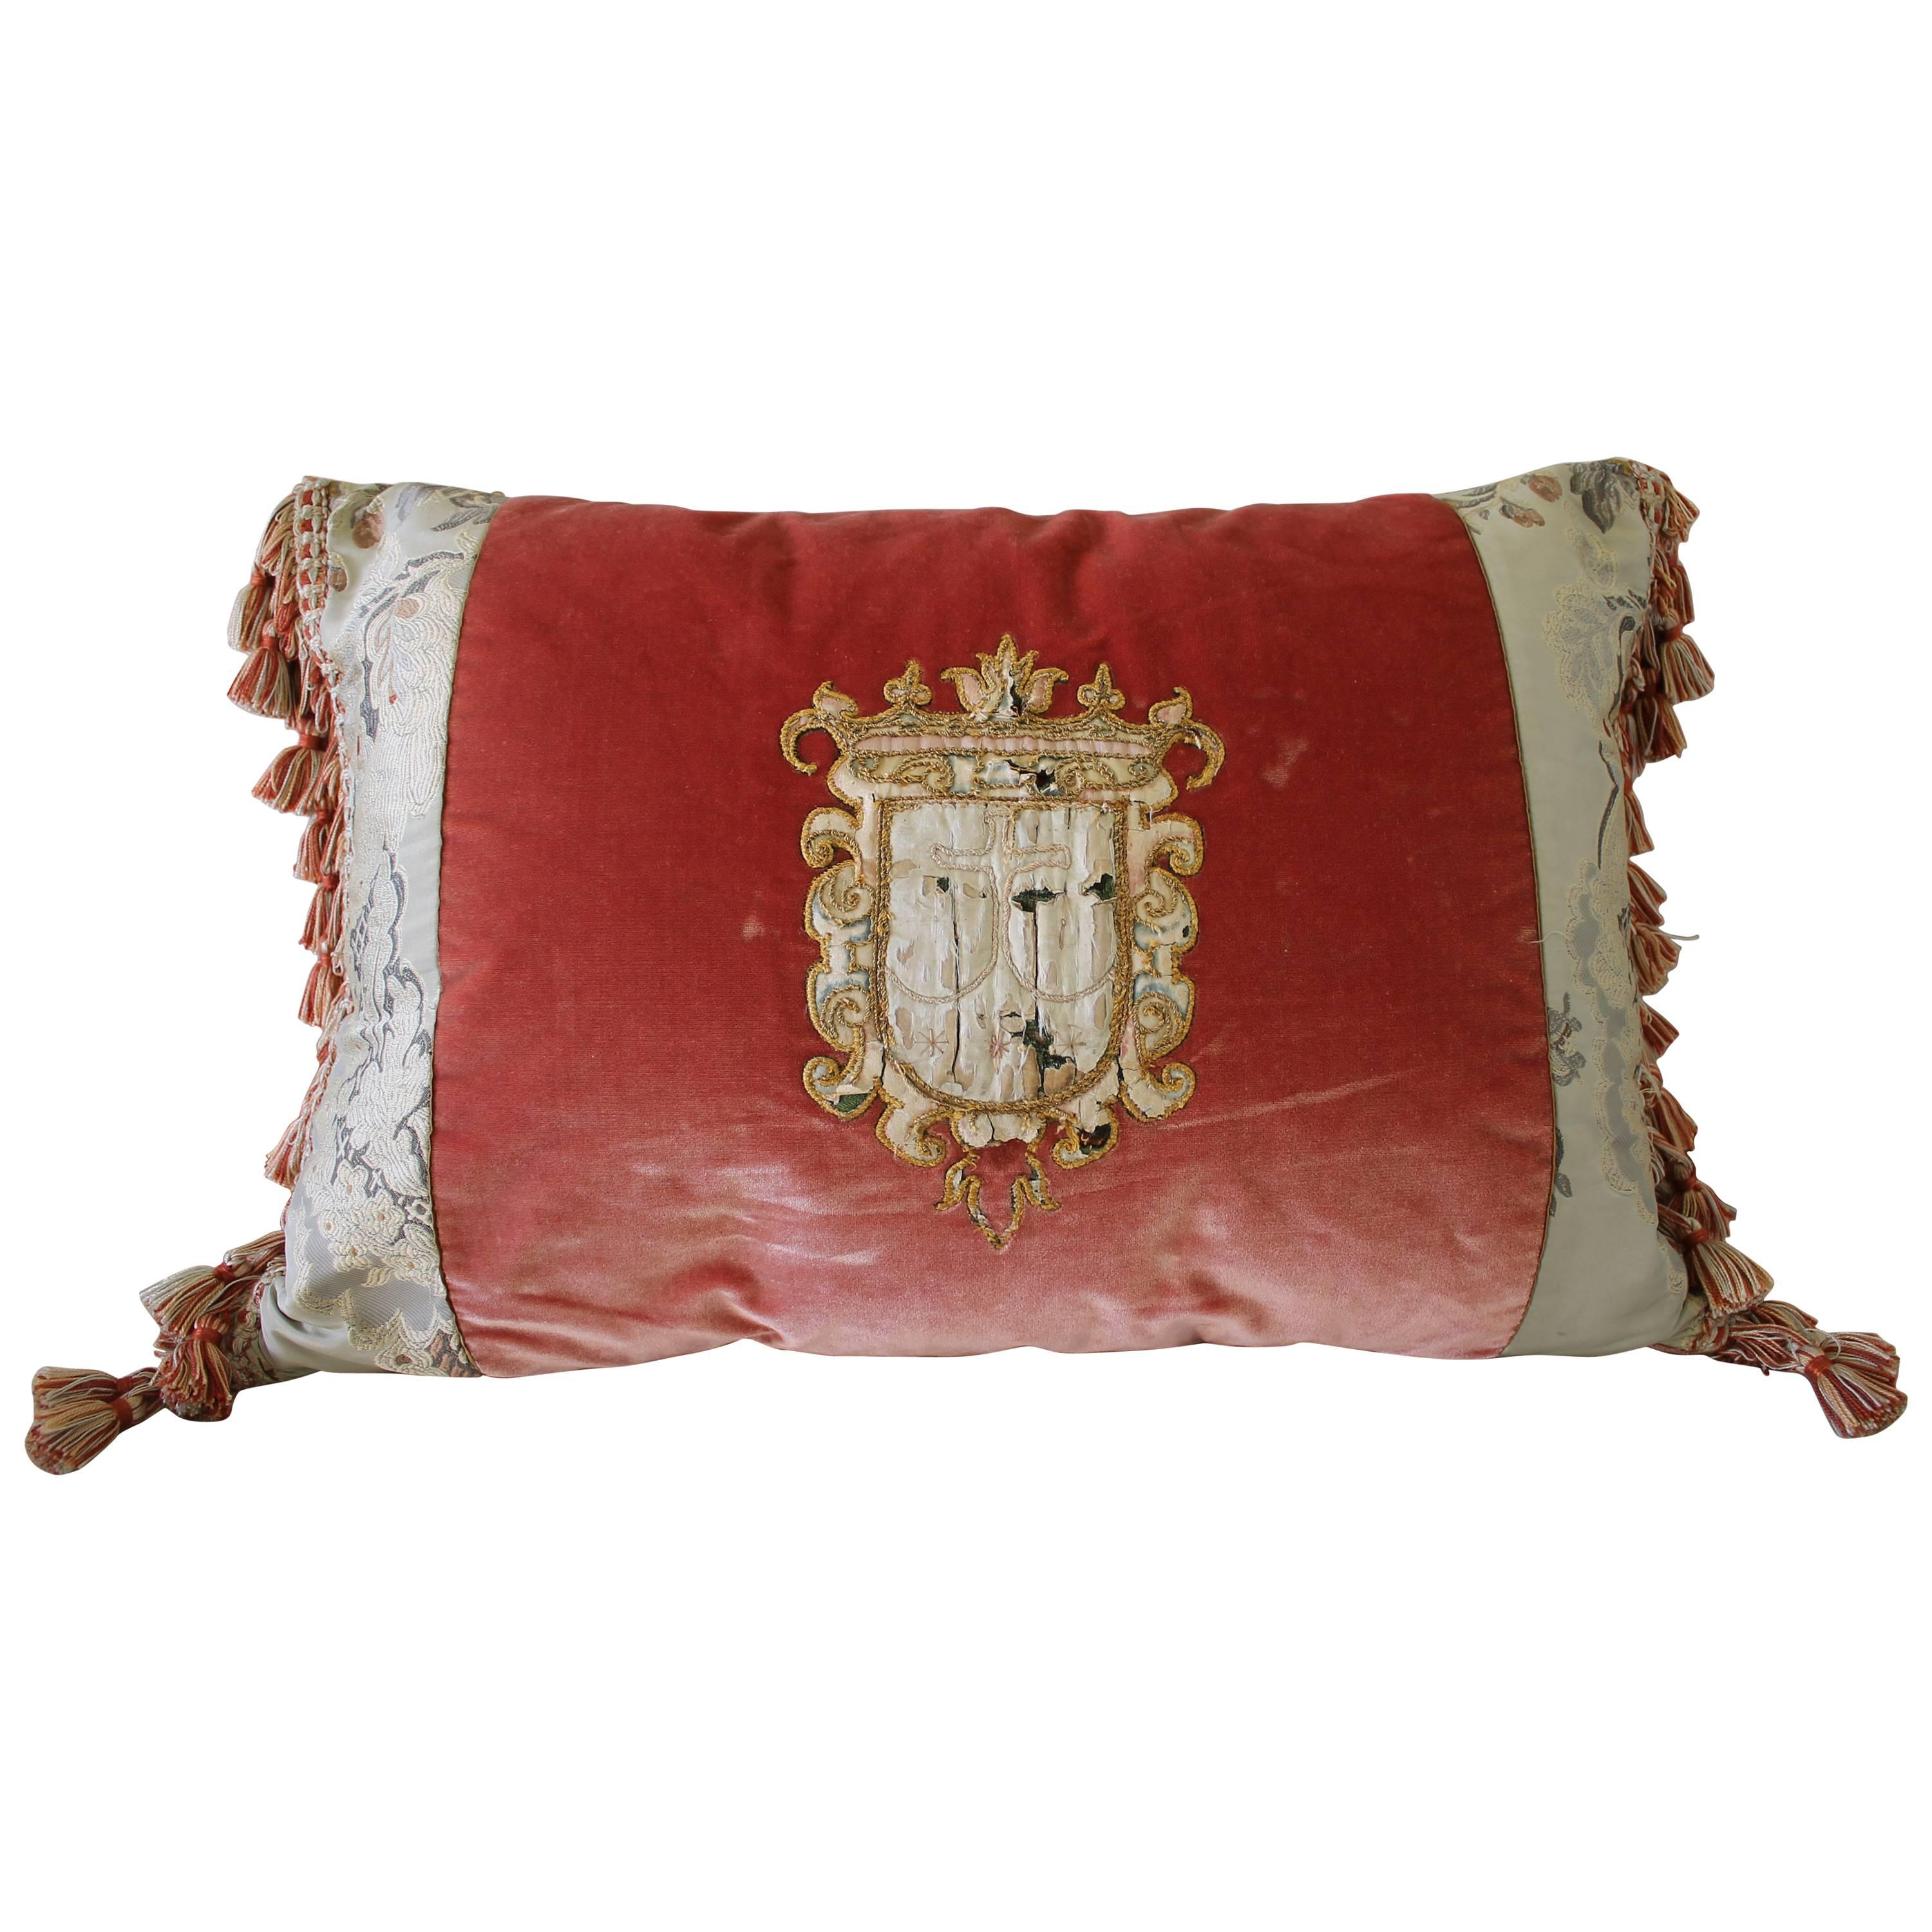 Antique Embroidered Crest Velvet with Tassle Pillow